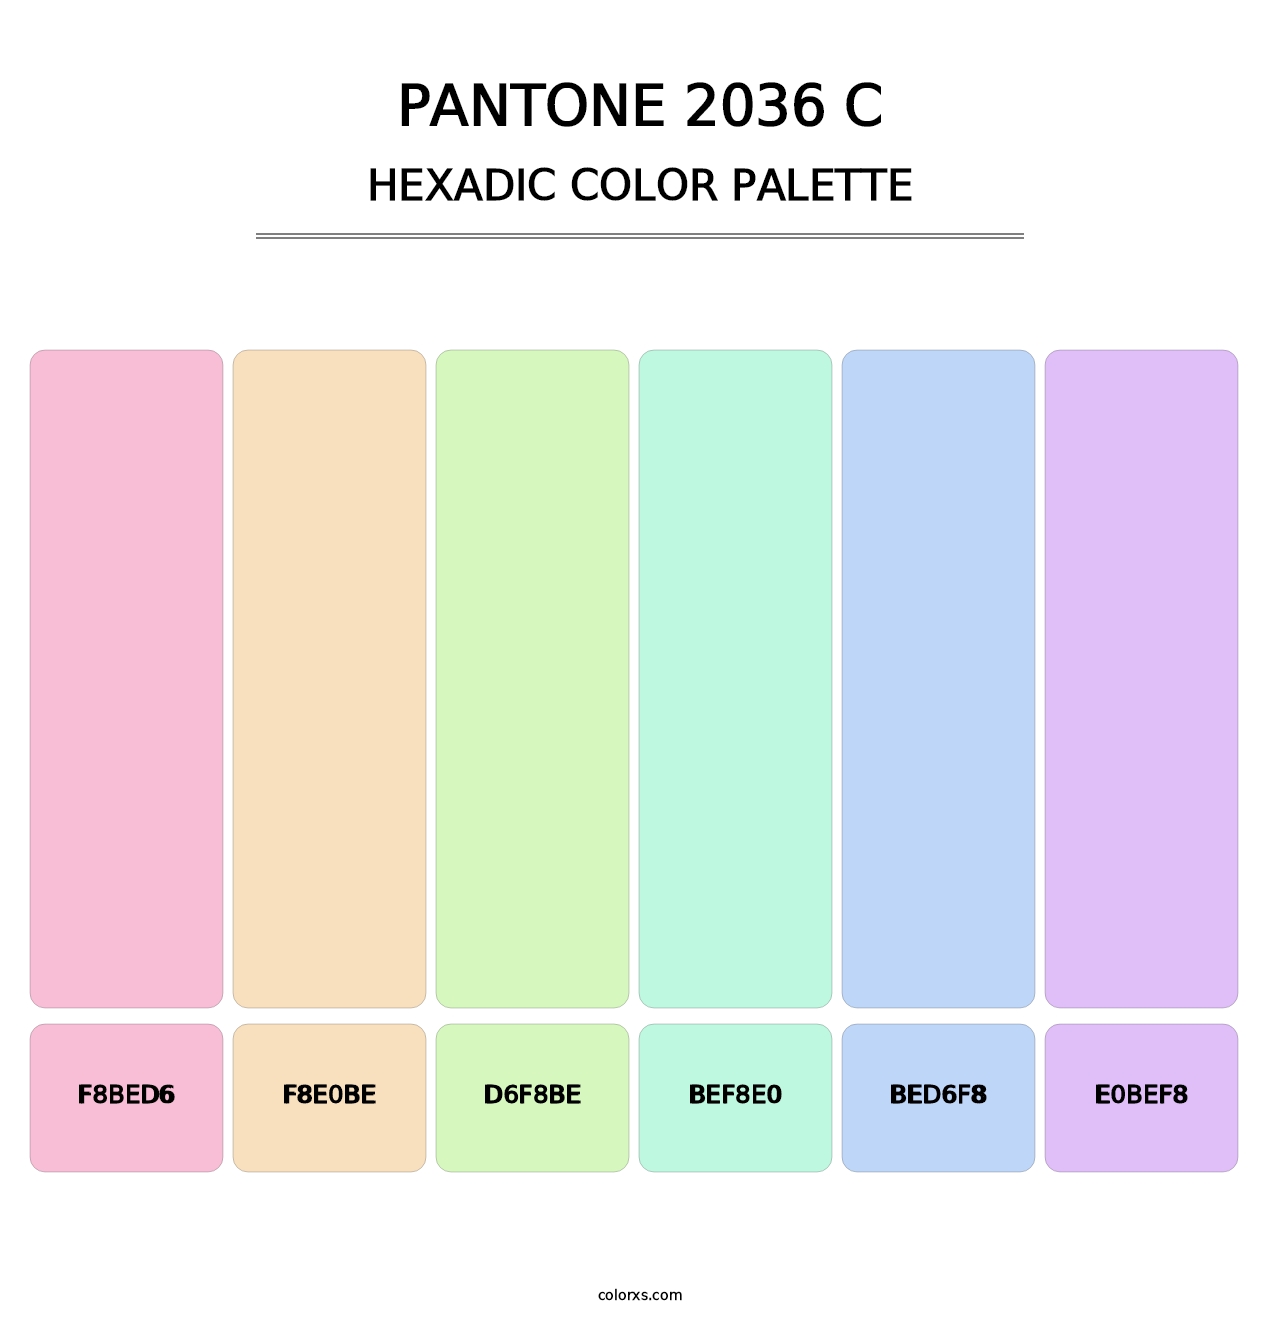 PANTONE 2036 C - Hexadic Color Palette